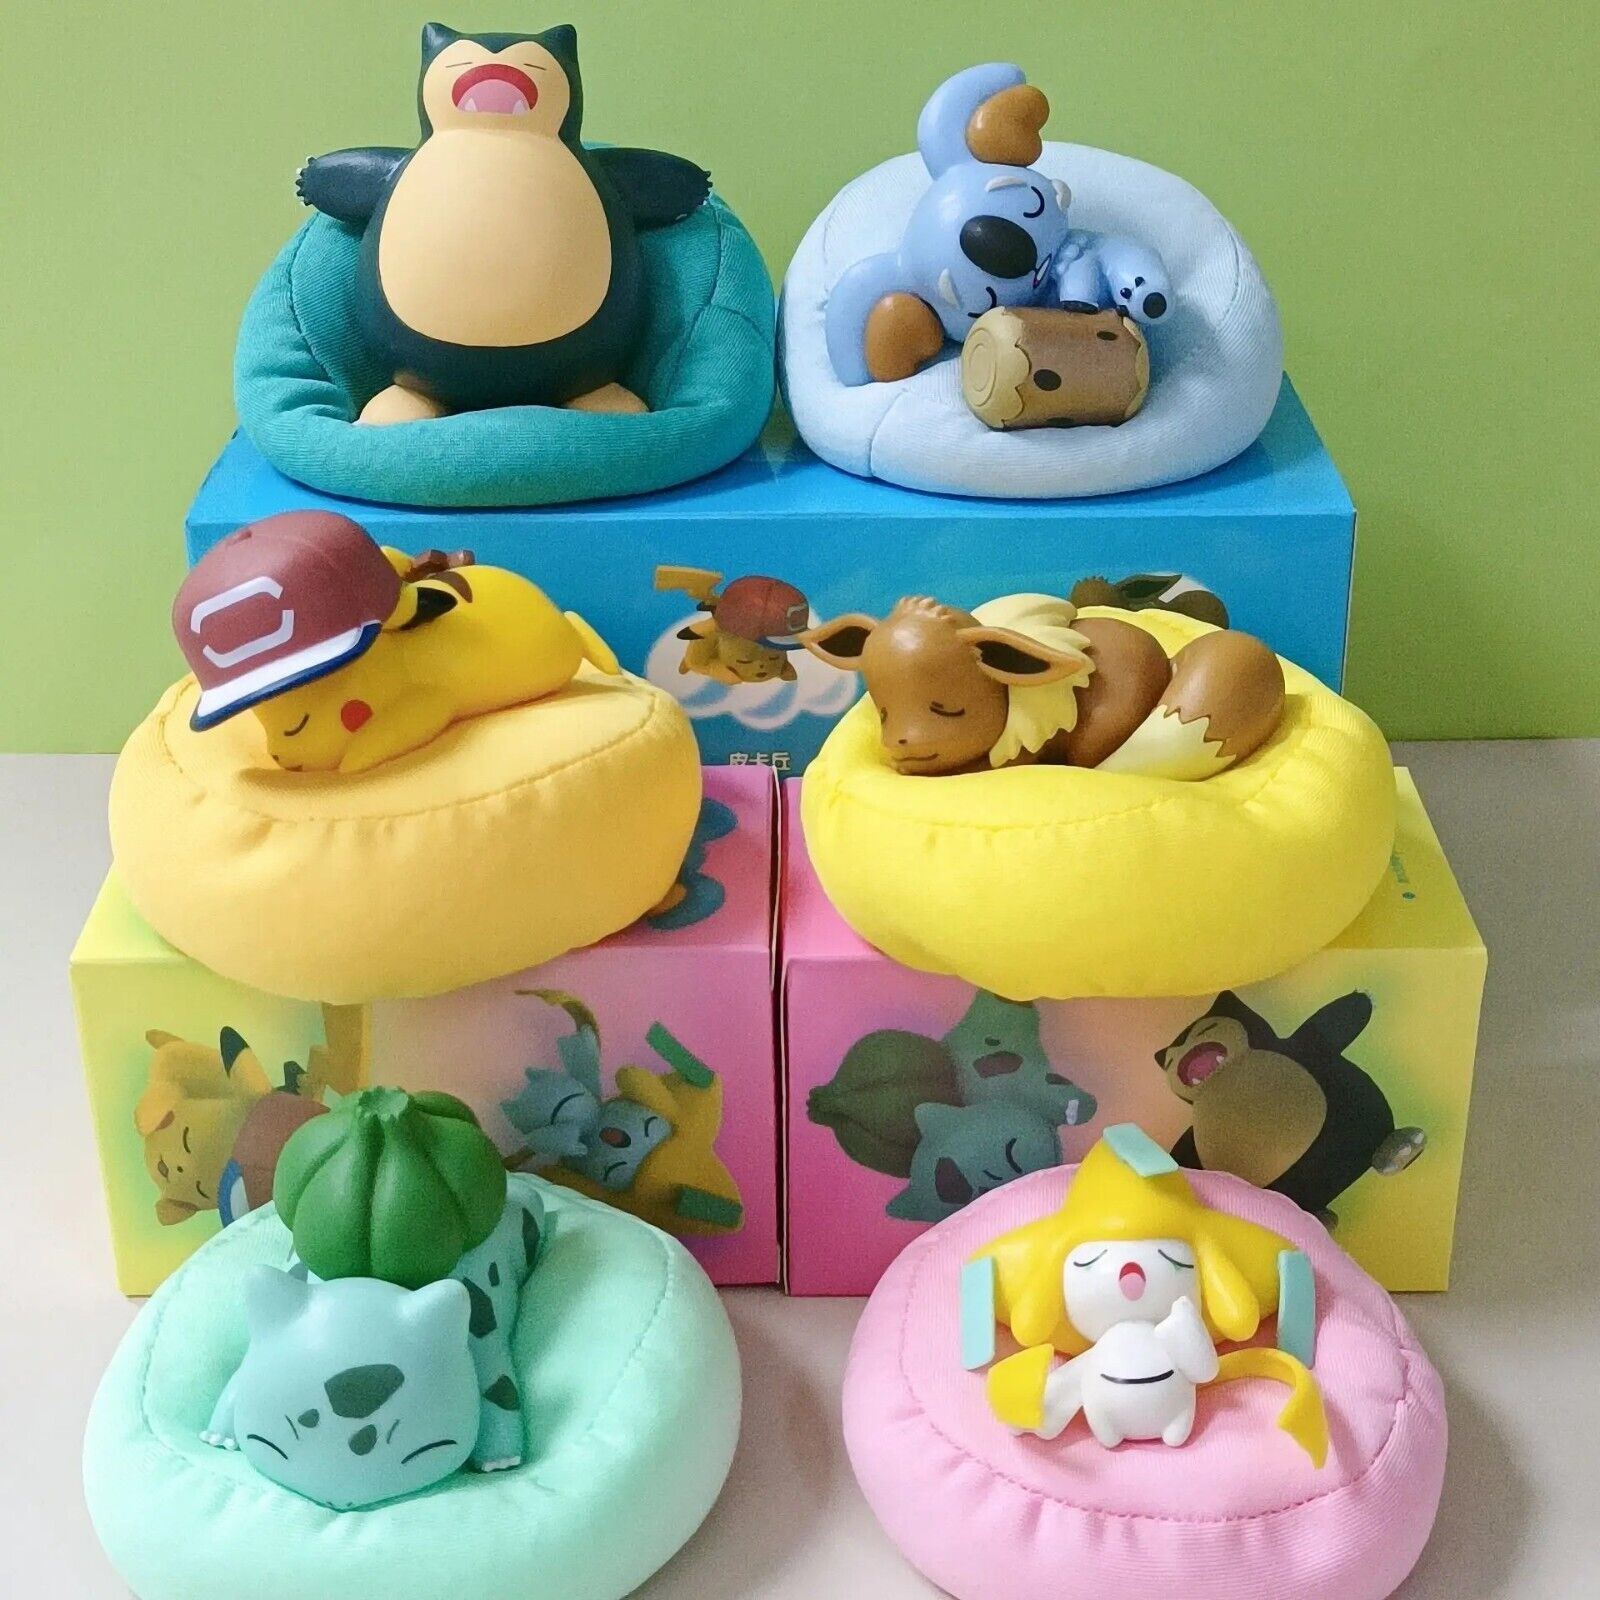 6 Pcs/Set Pokemon Pikachu Bulbasaur Anime Figures Toys Sleep Starry Dream Series